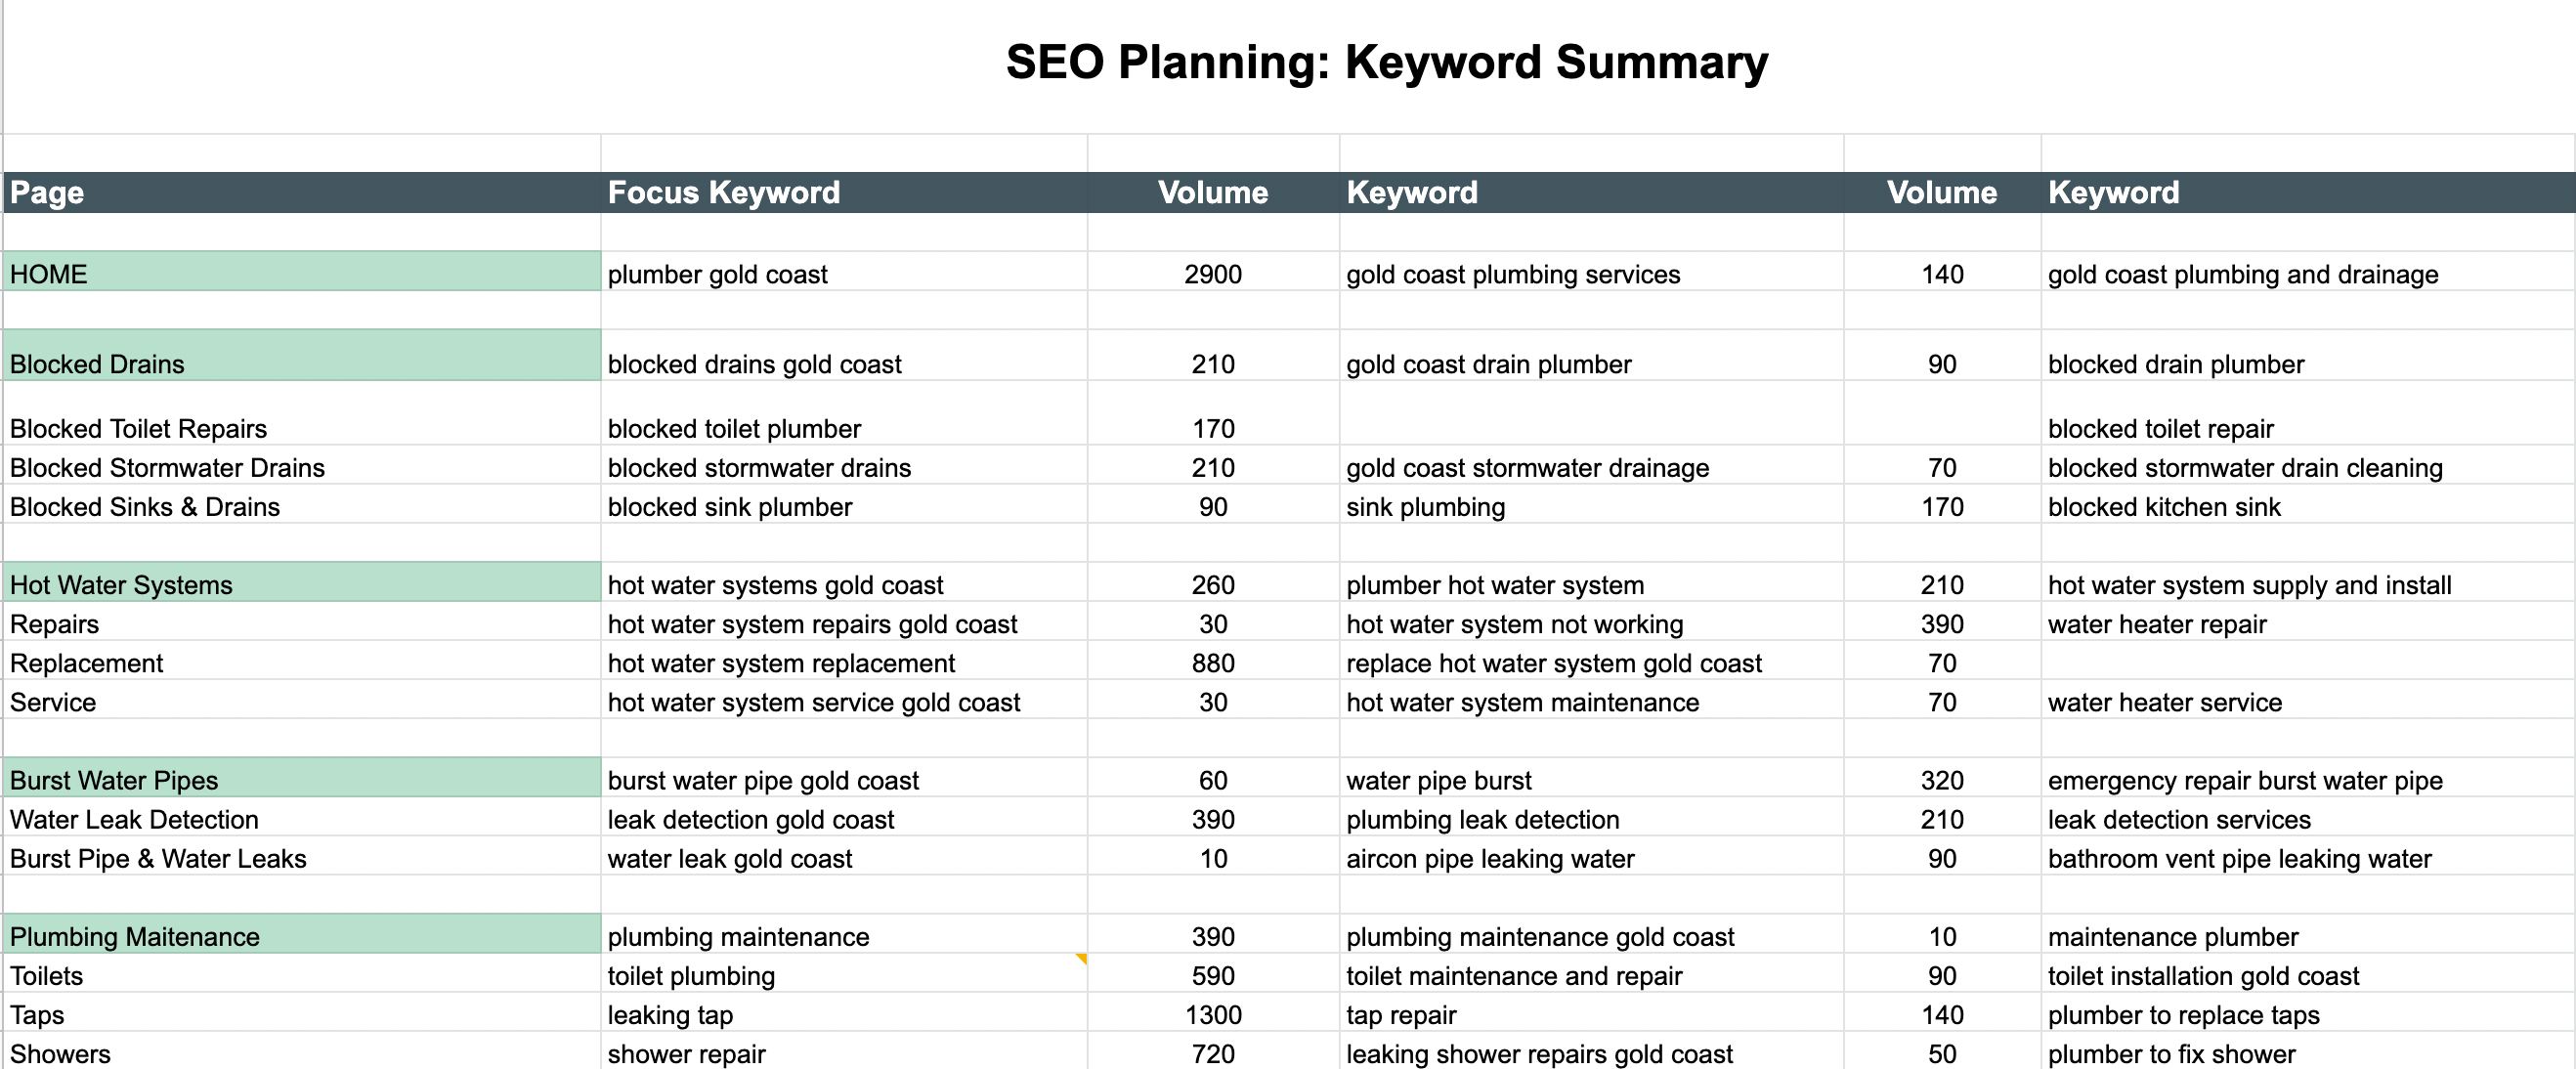 Keyword planning